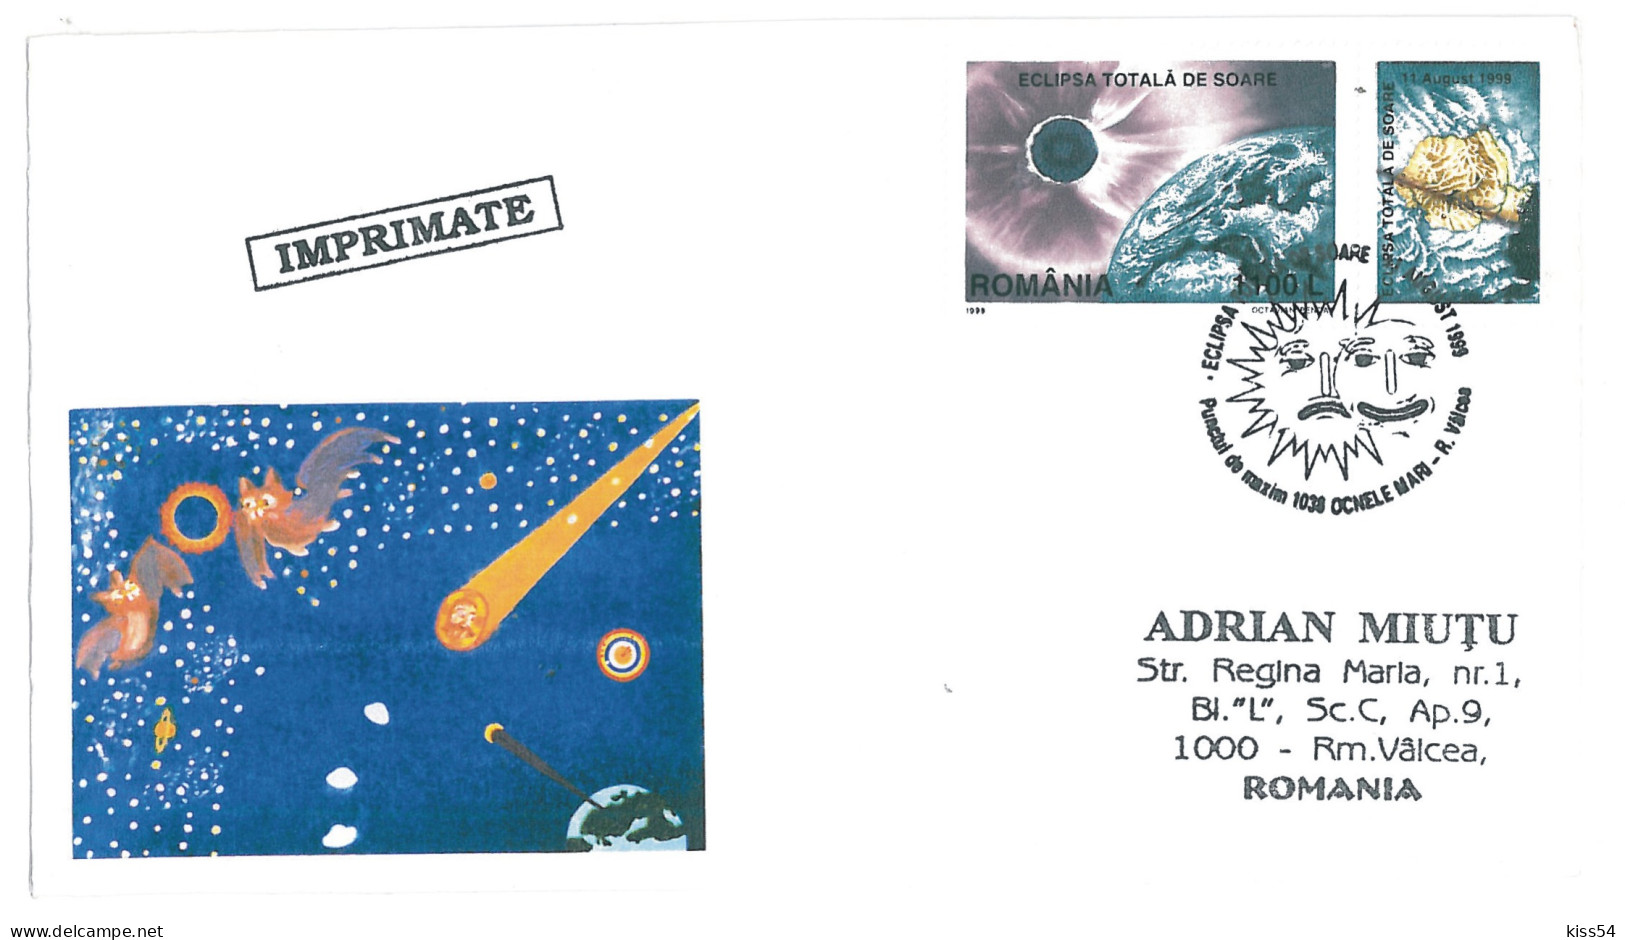 COV 87 - 1513 ASTRONOMY, Total Solar Eclipse, Romania, Stamp With Vignette - Cover - Used - 1999 - Cartes-maximum (CM)